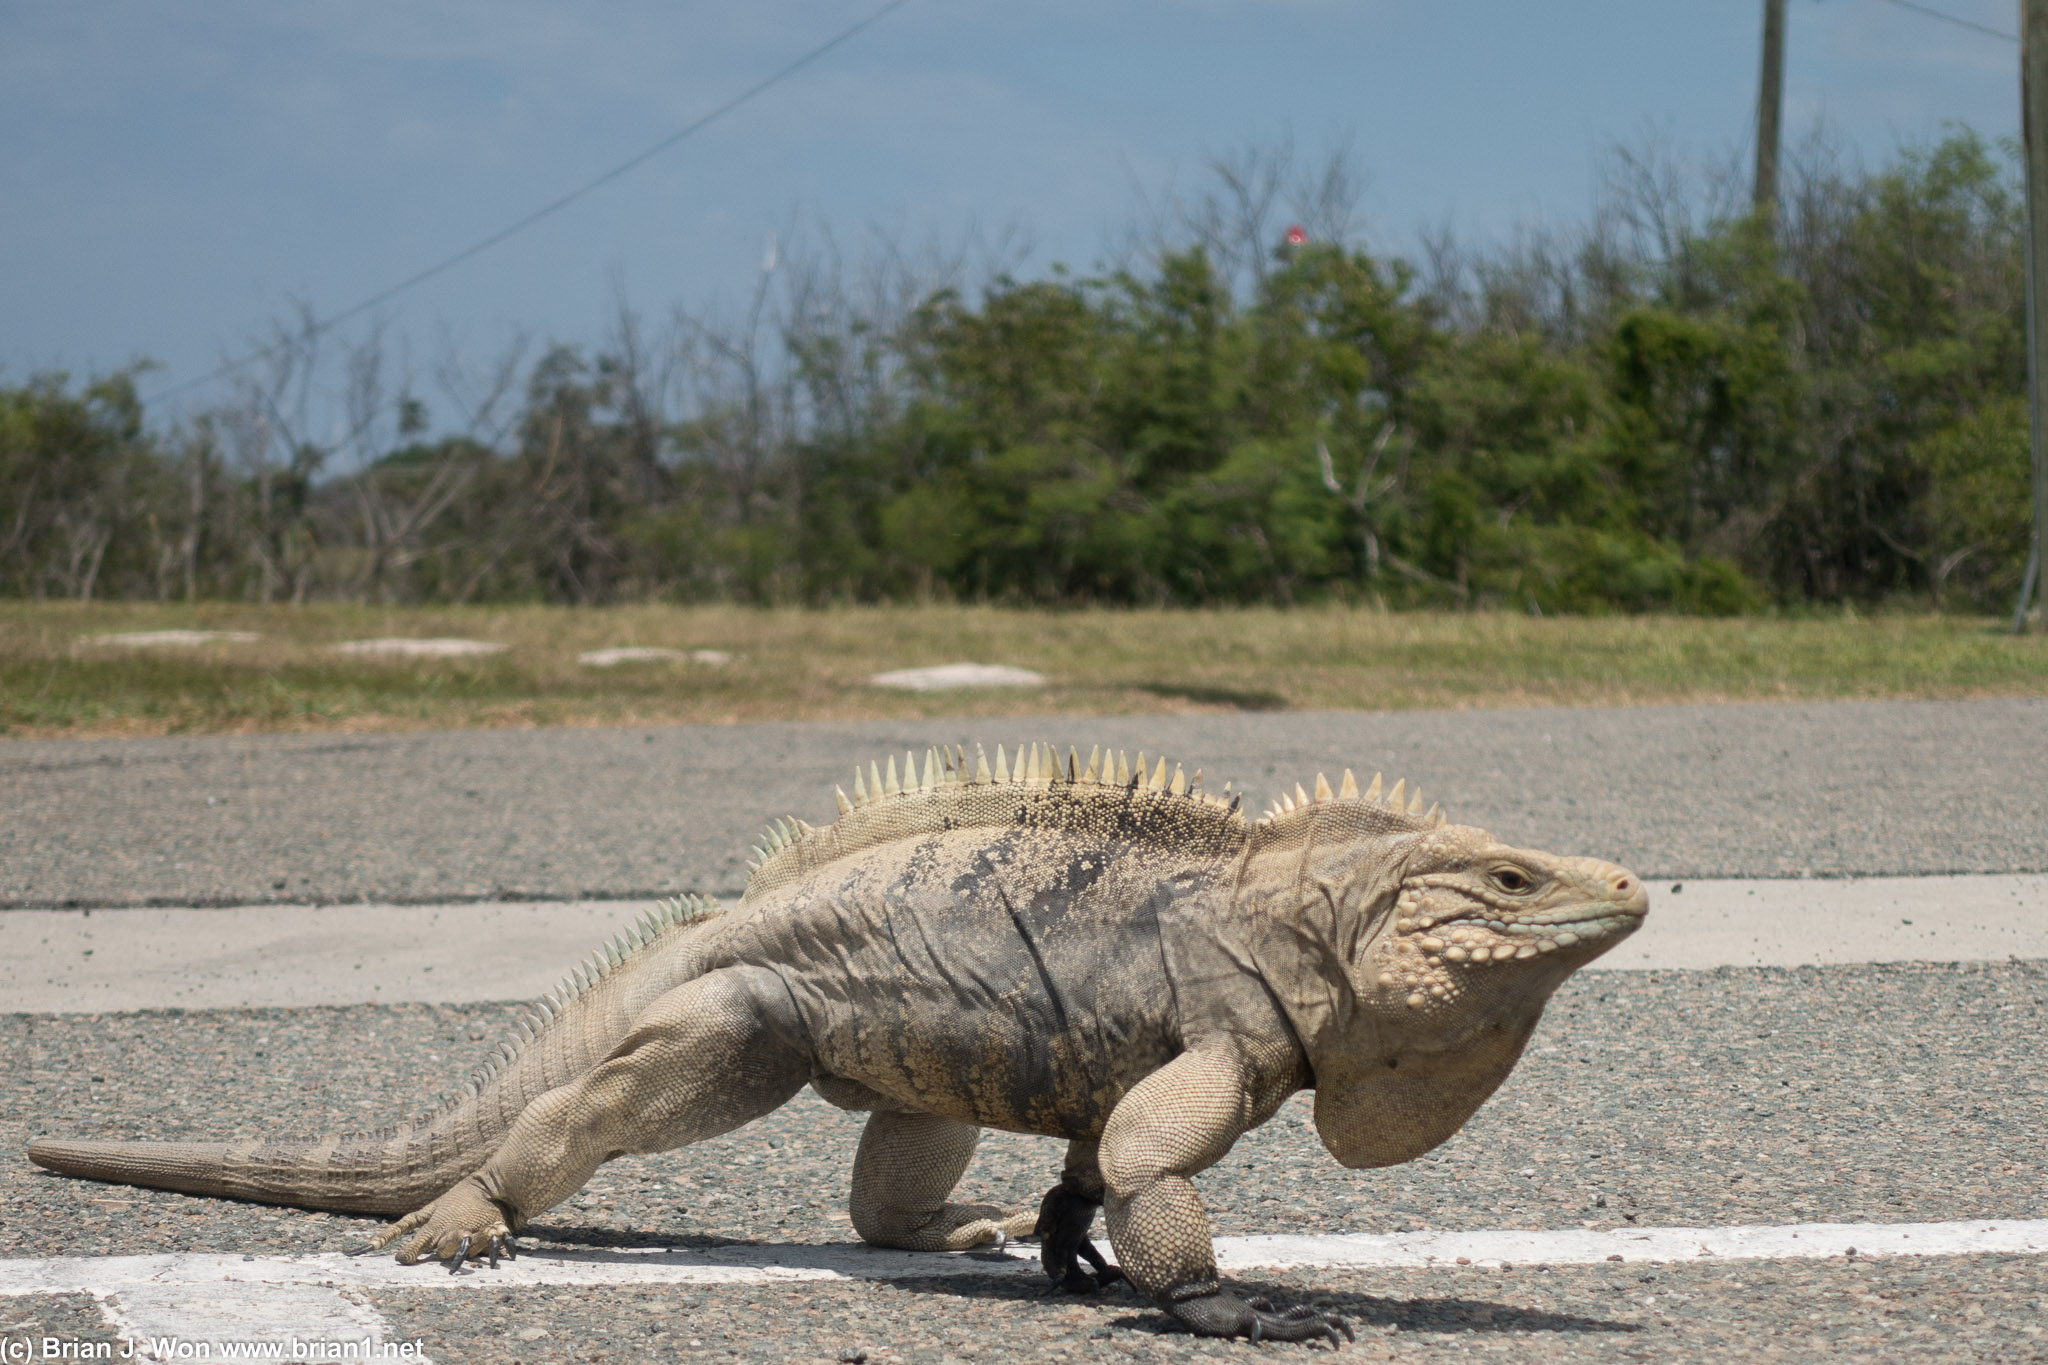 Big iguana striding across the parking lot like a boss.